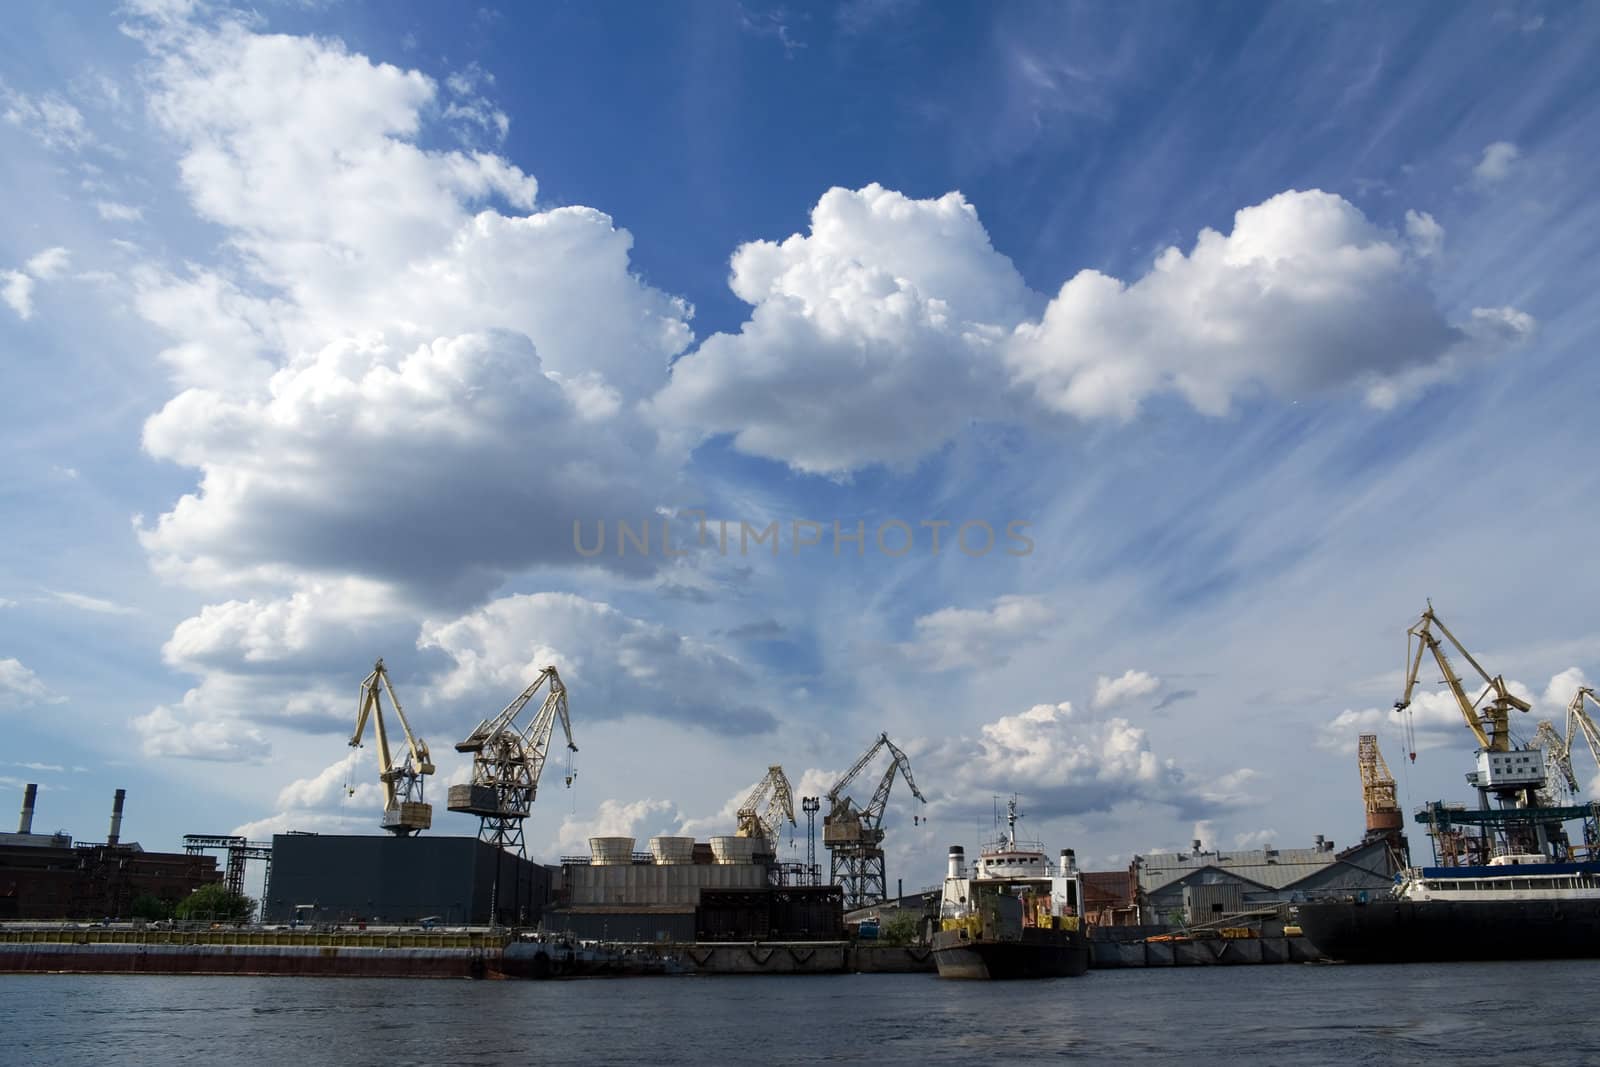 Shipyard by timbrk